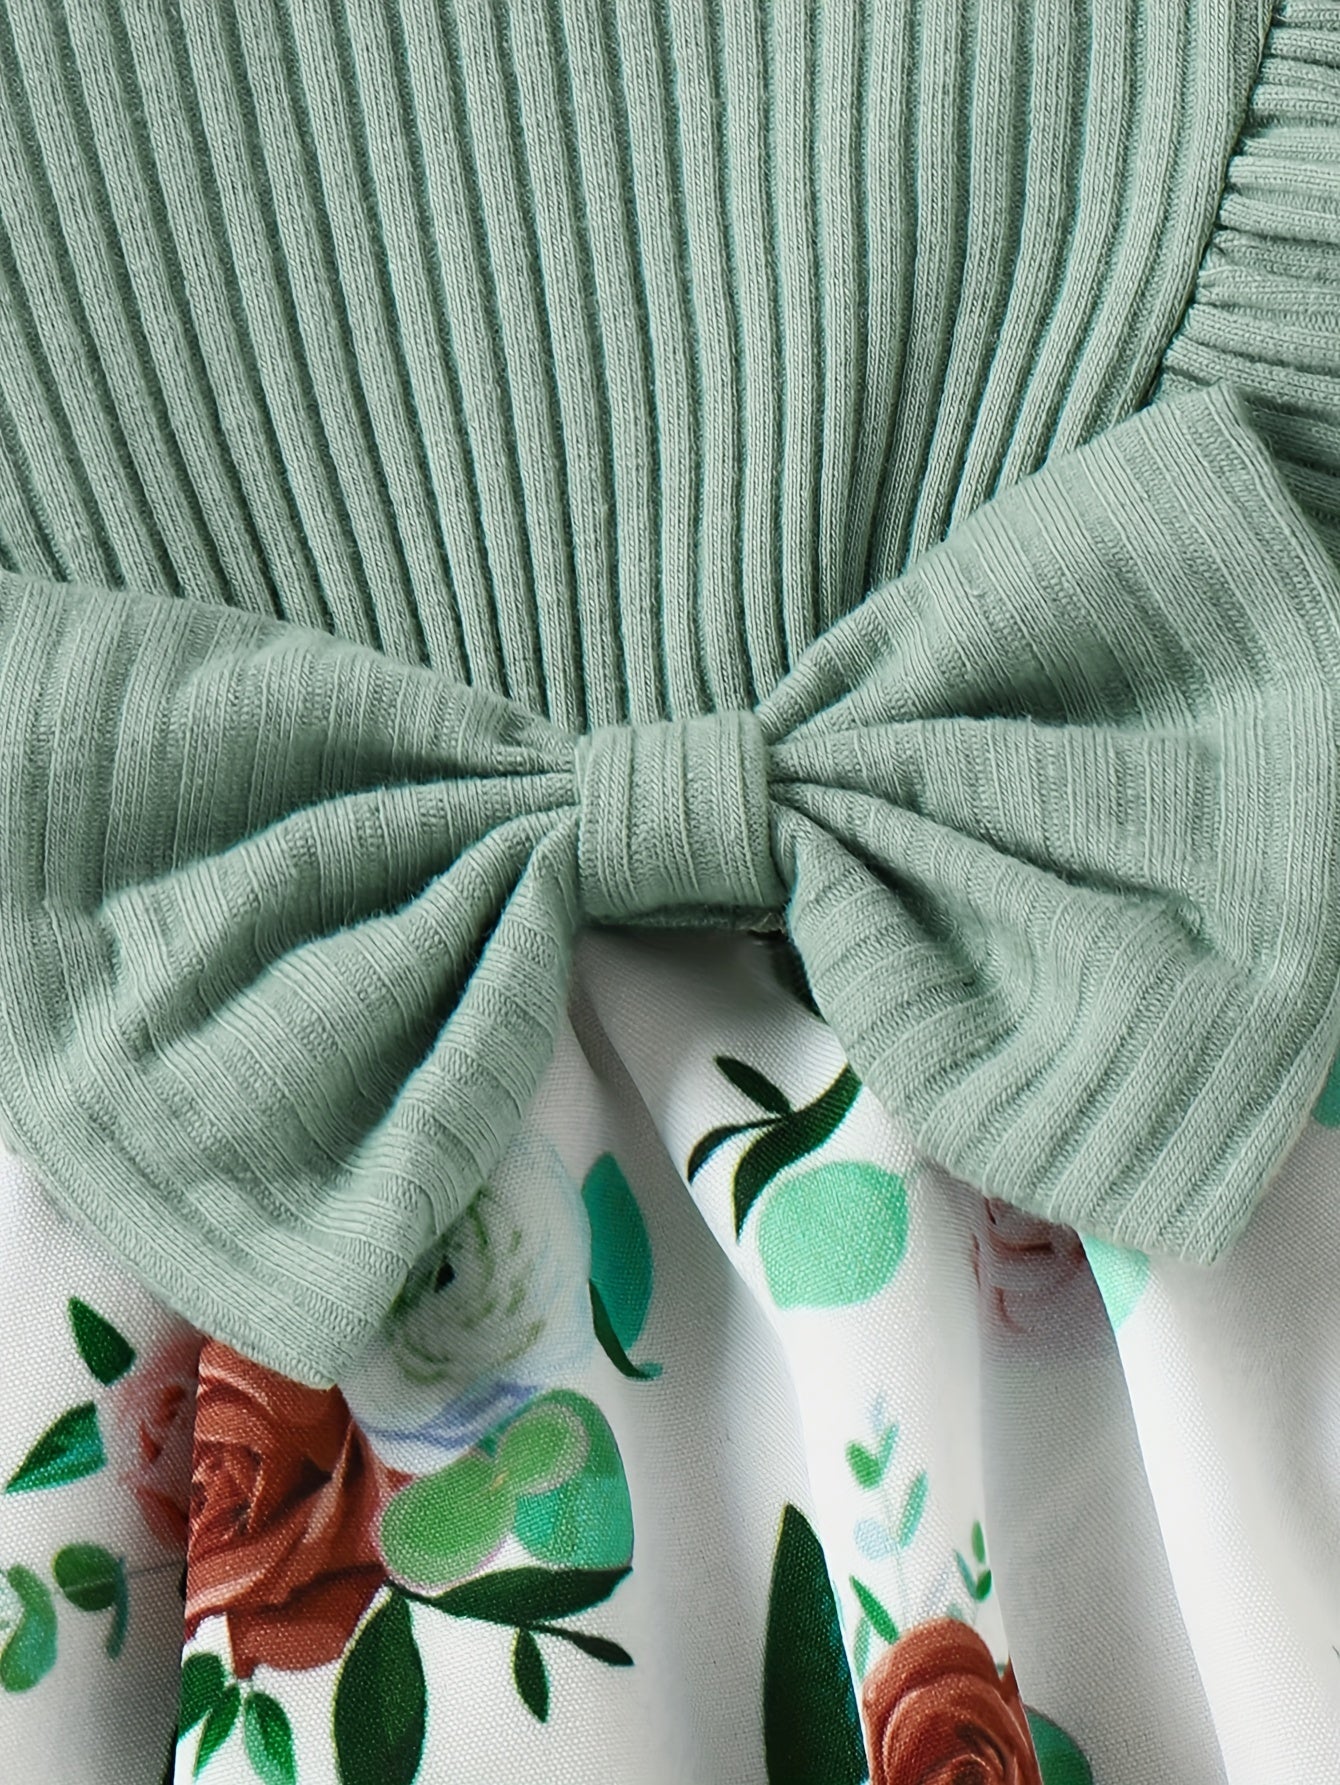 Infant Baby Girls Long-sleeved Pit Stripe Skirt Hem Floral Printed Dress With Bow Knot Headband 3pcs Set